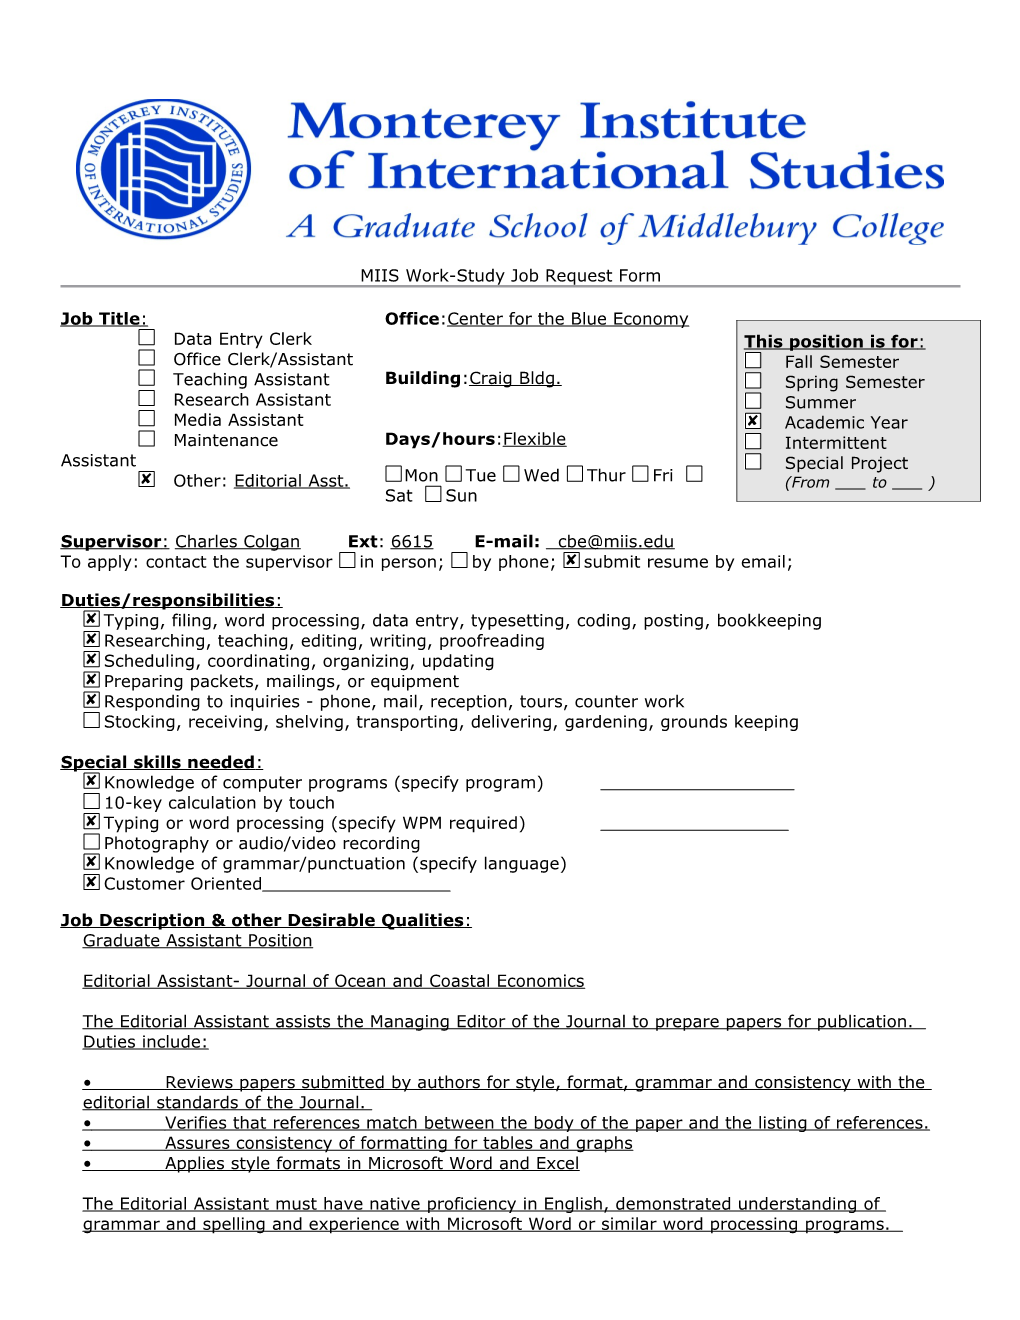 MIIS Work-Study Job Request Form s1